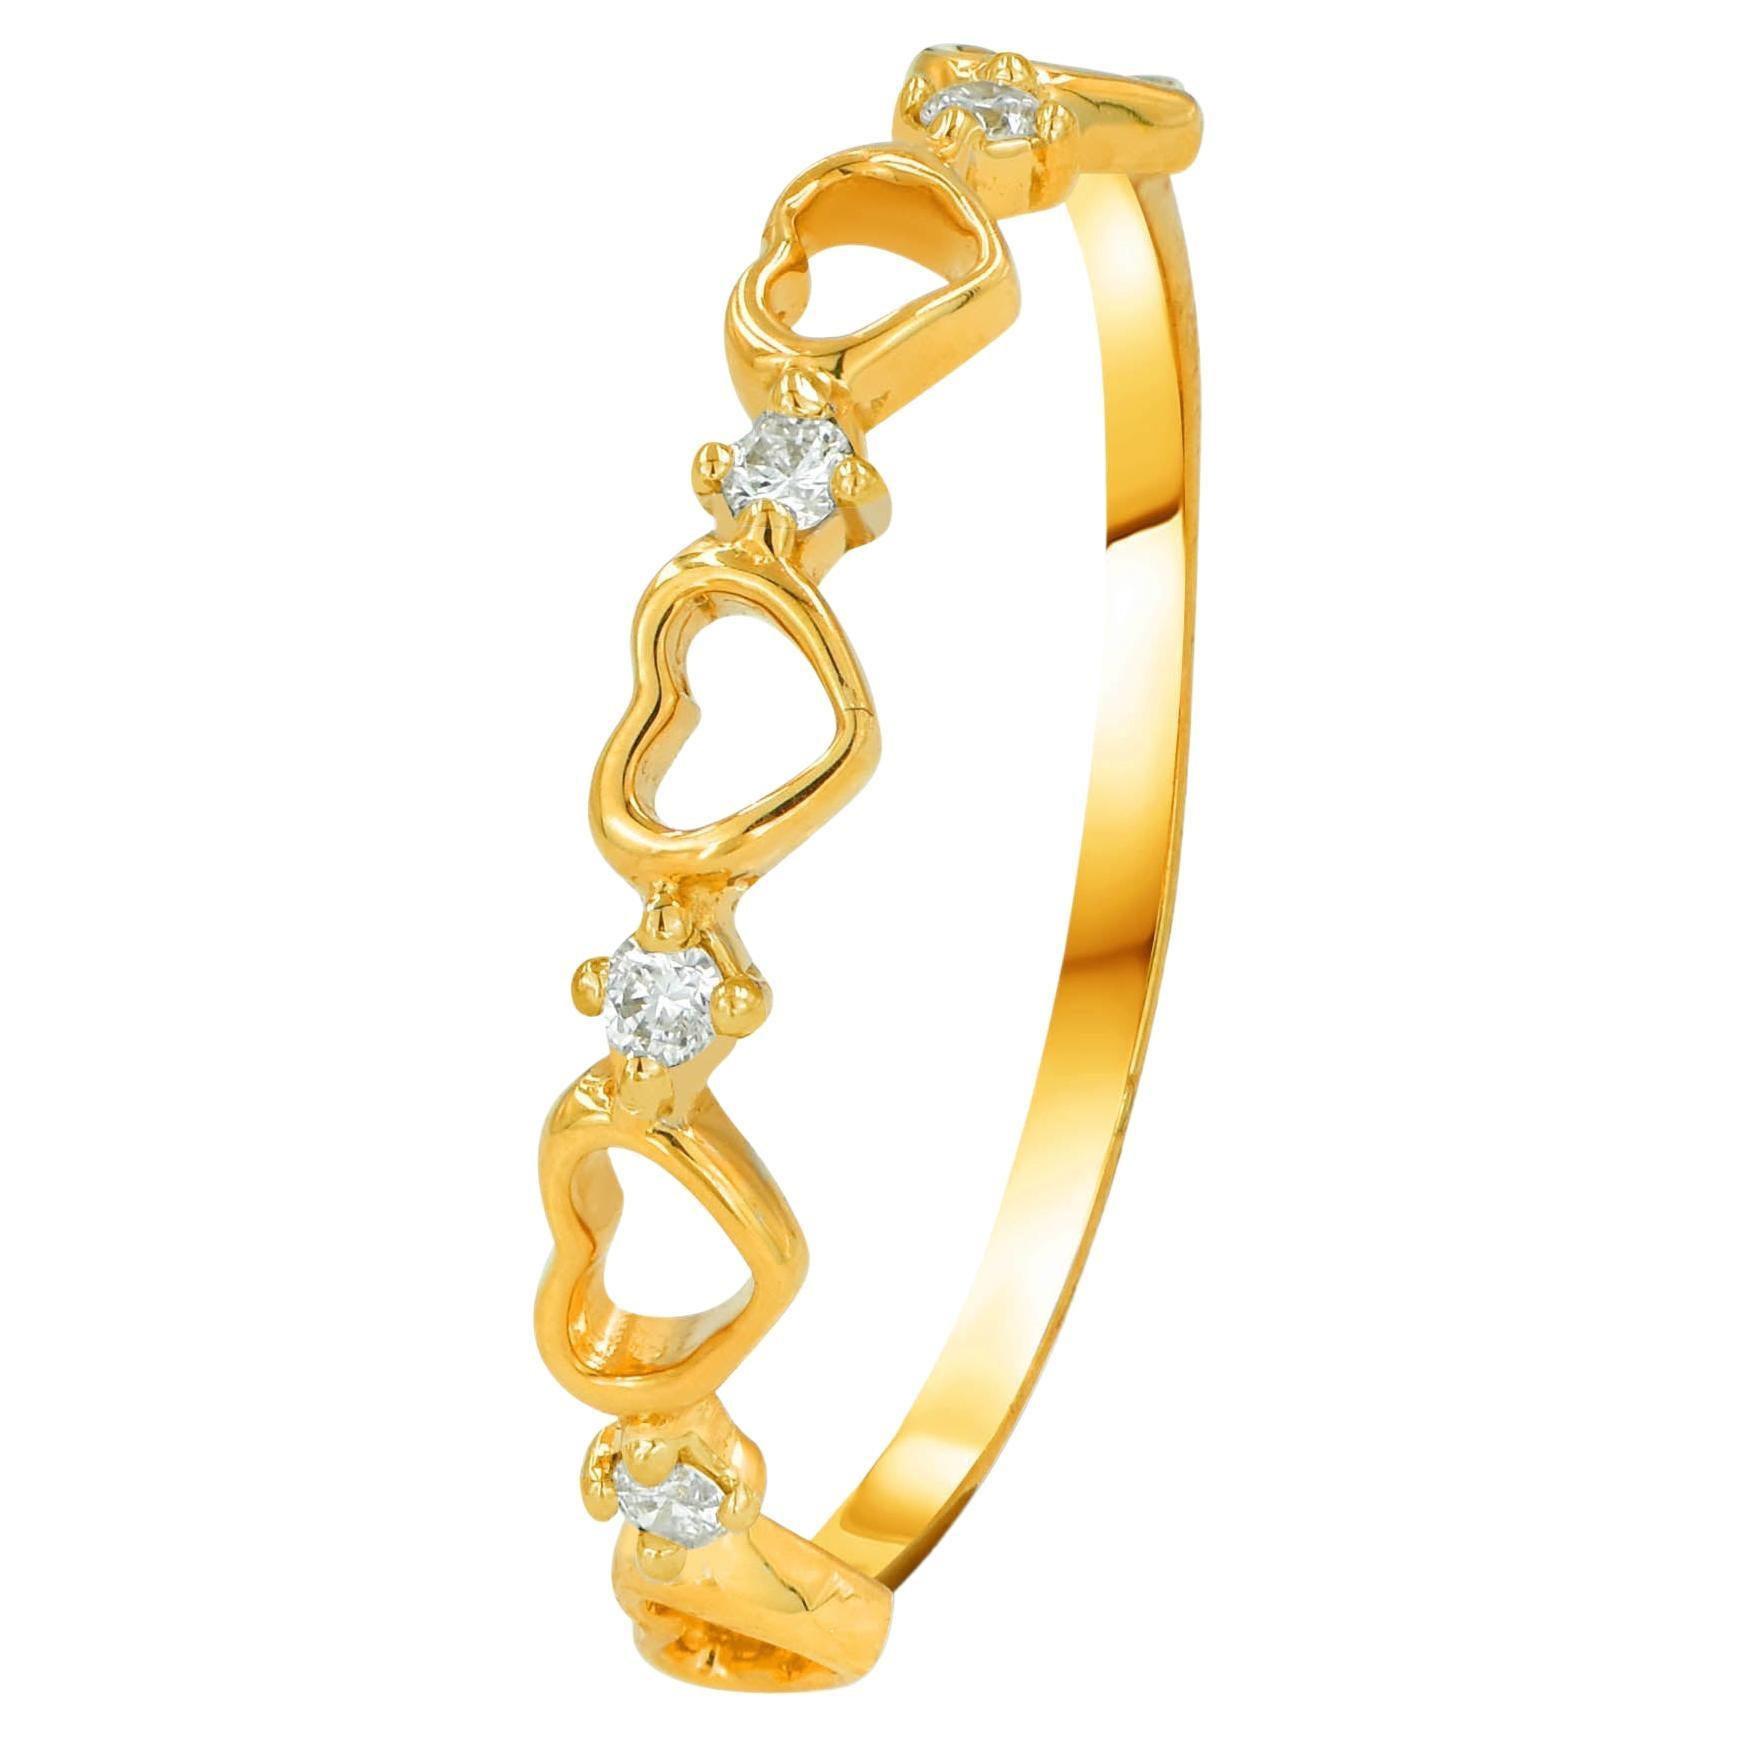 For Sale:  18k Gold 0.07 Carat Diamond Heart Ring